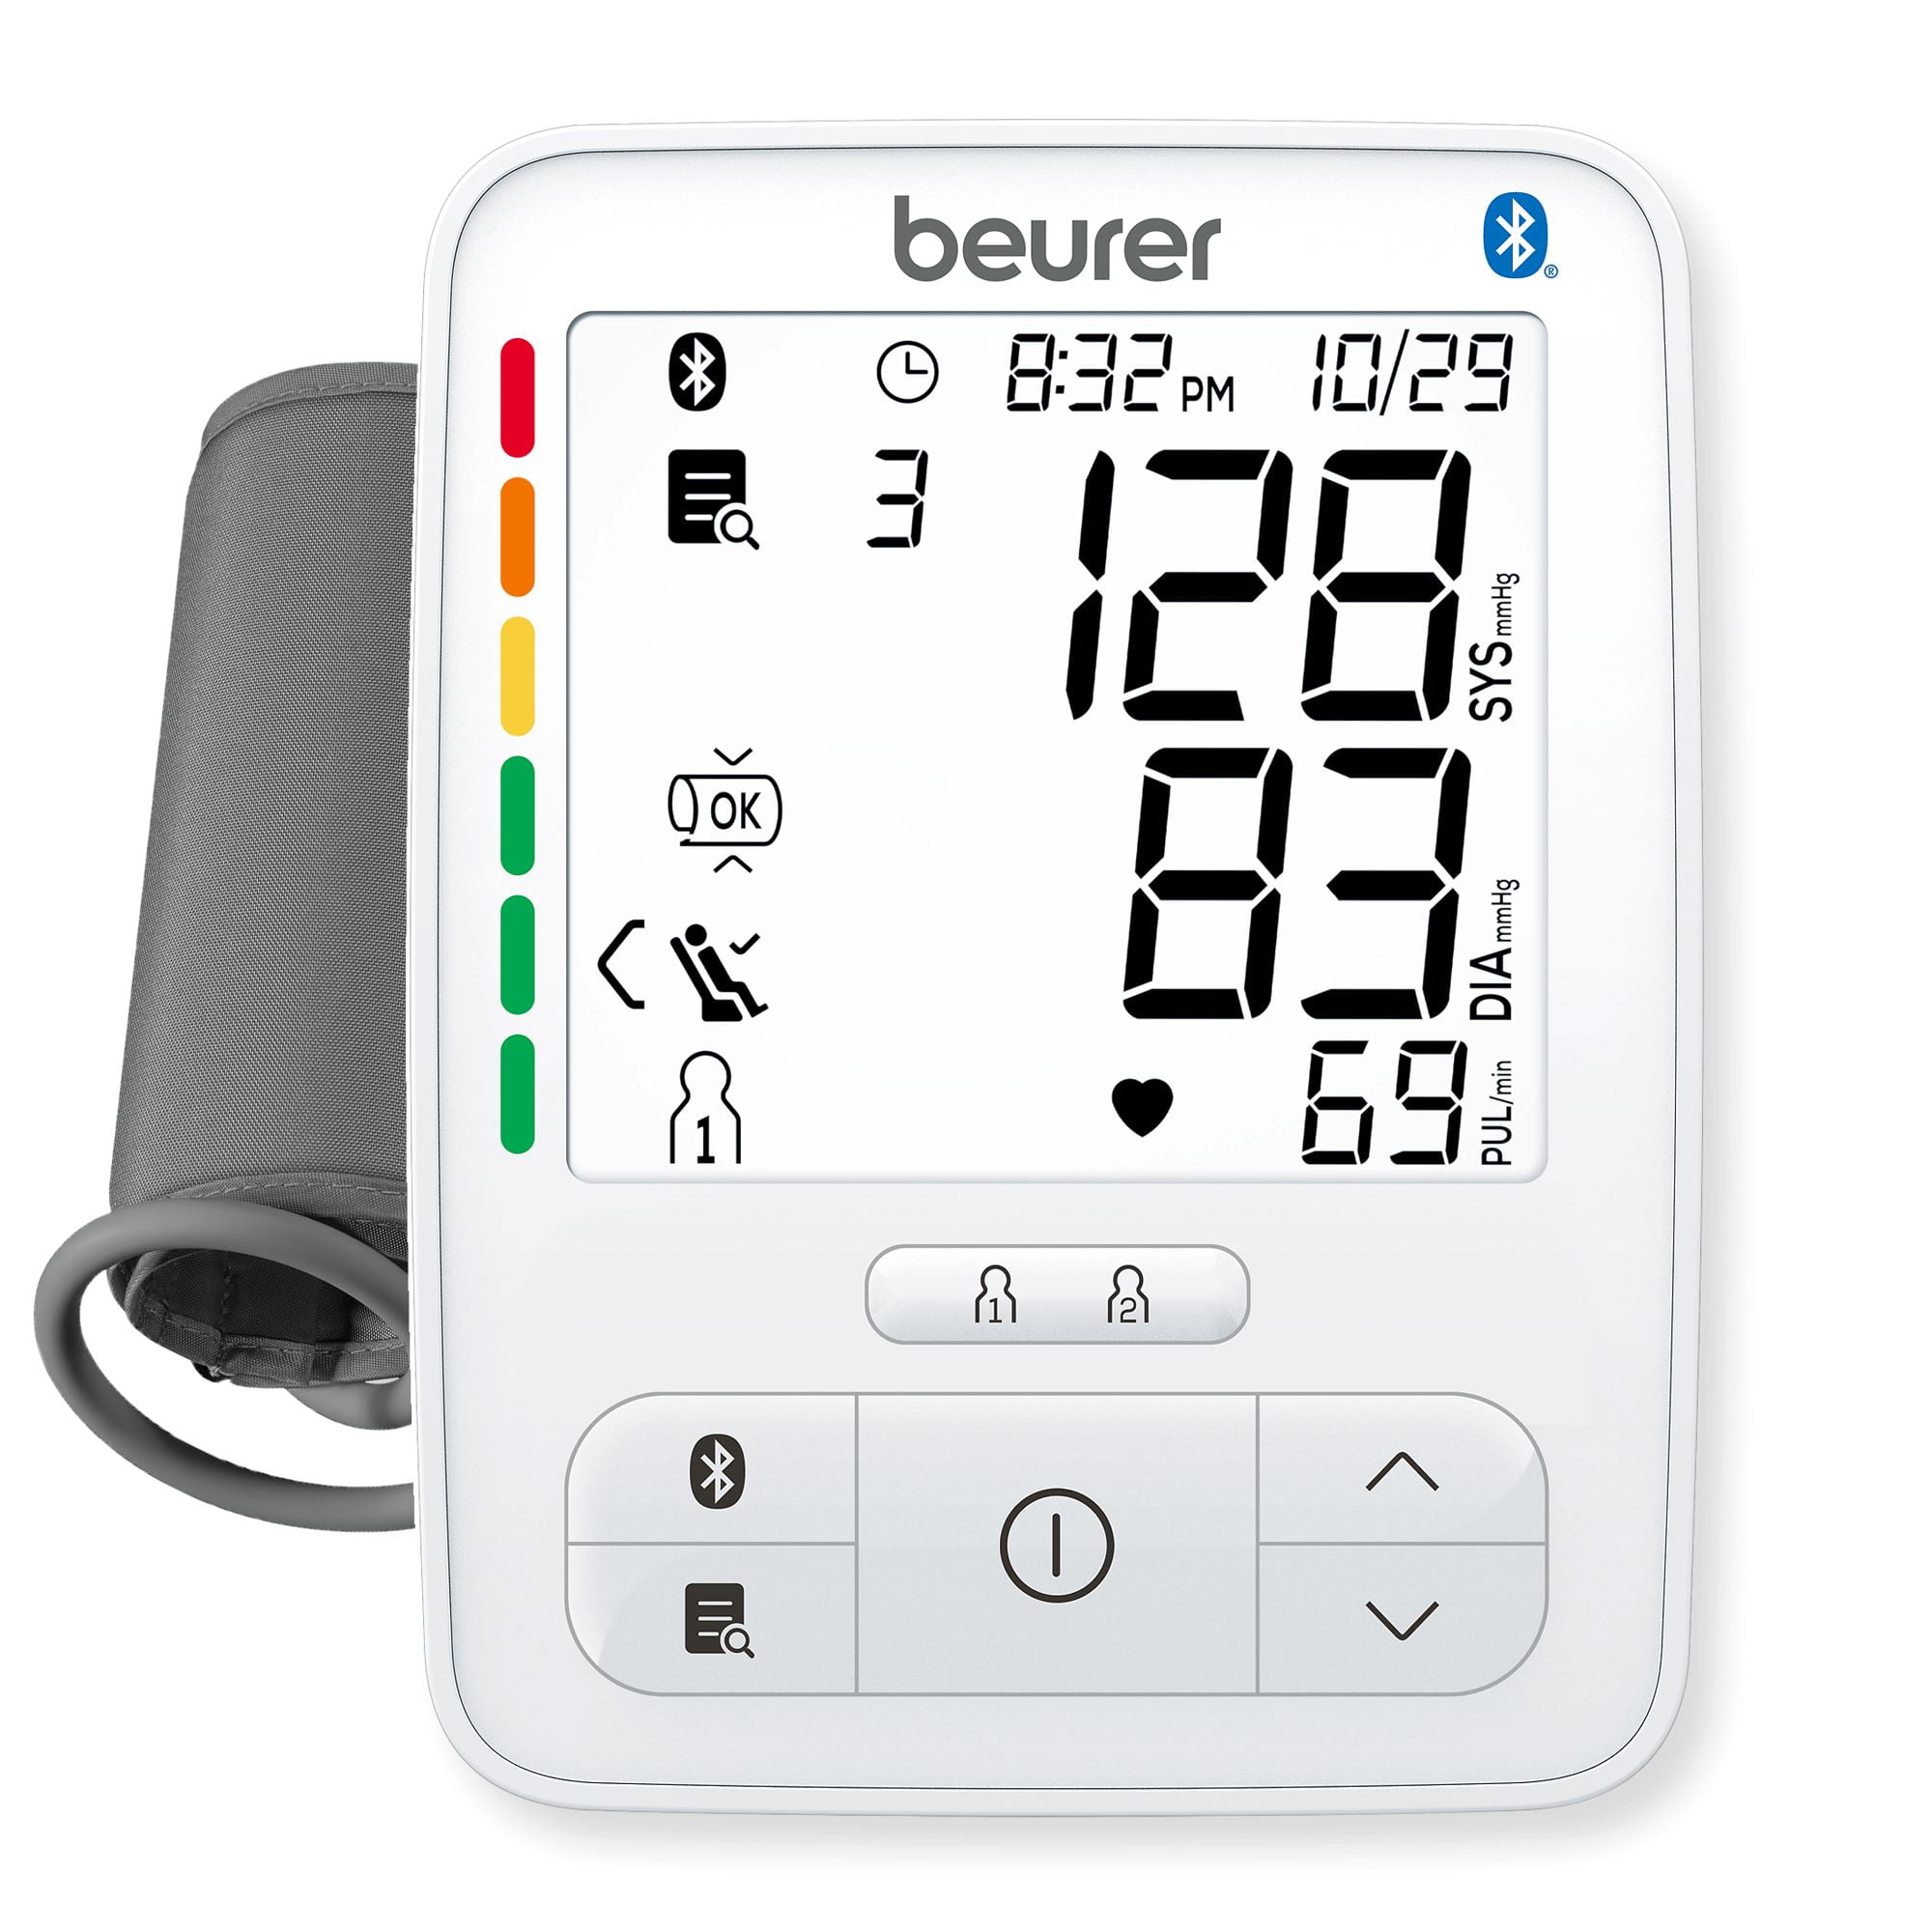 Omron 10 Series Blood Pressure Monitor - Gopher Sport